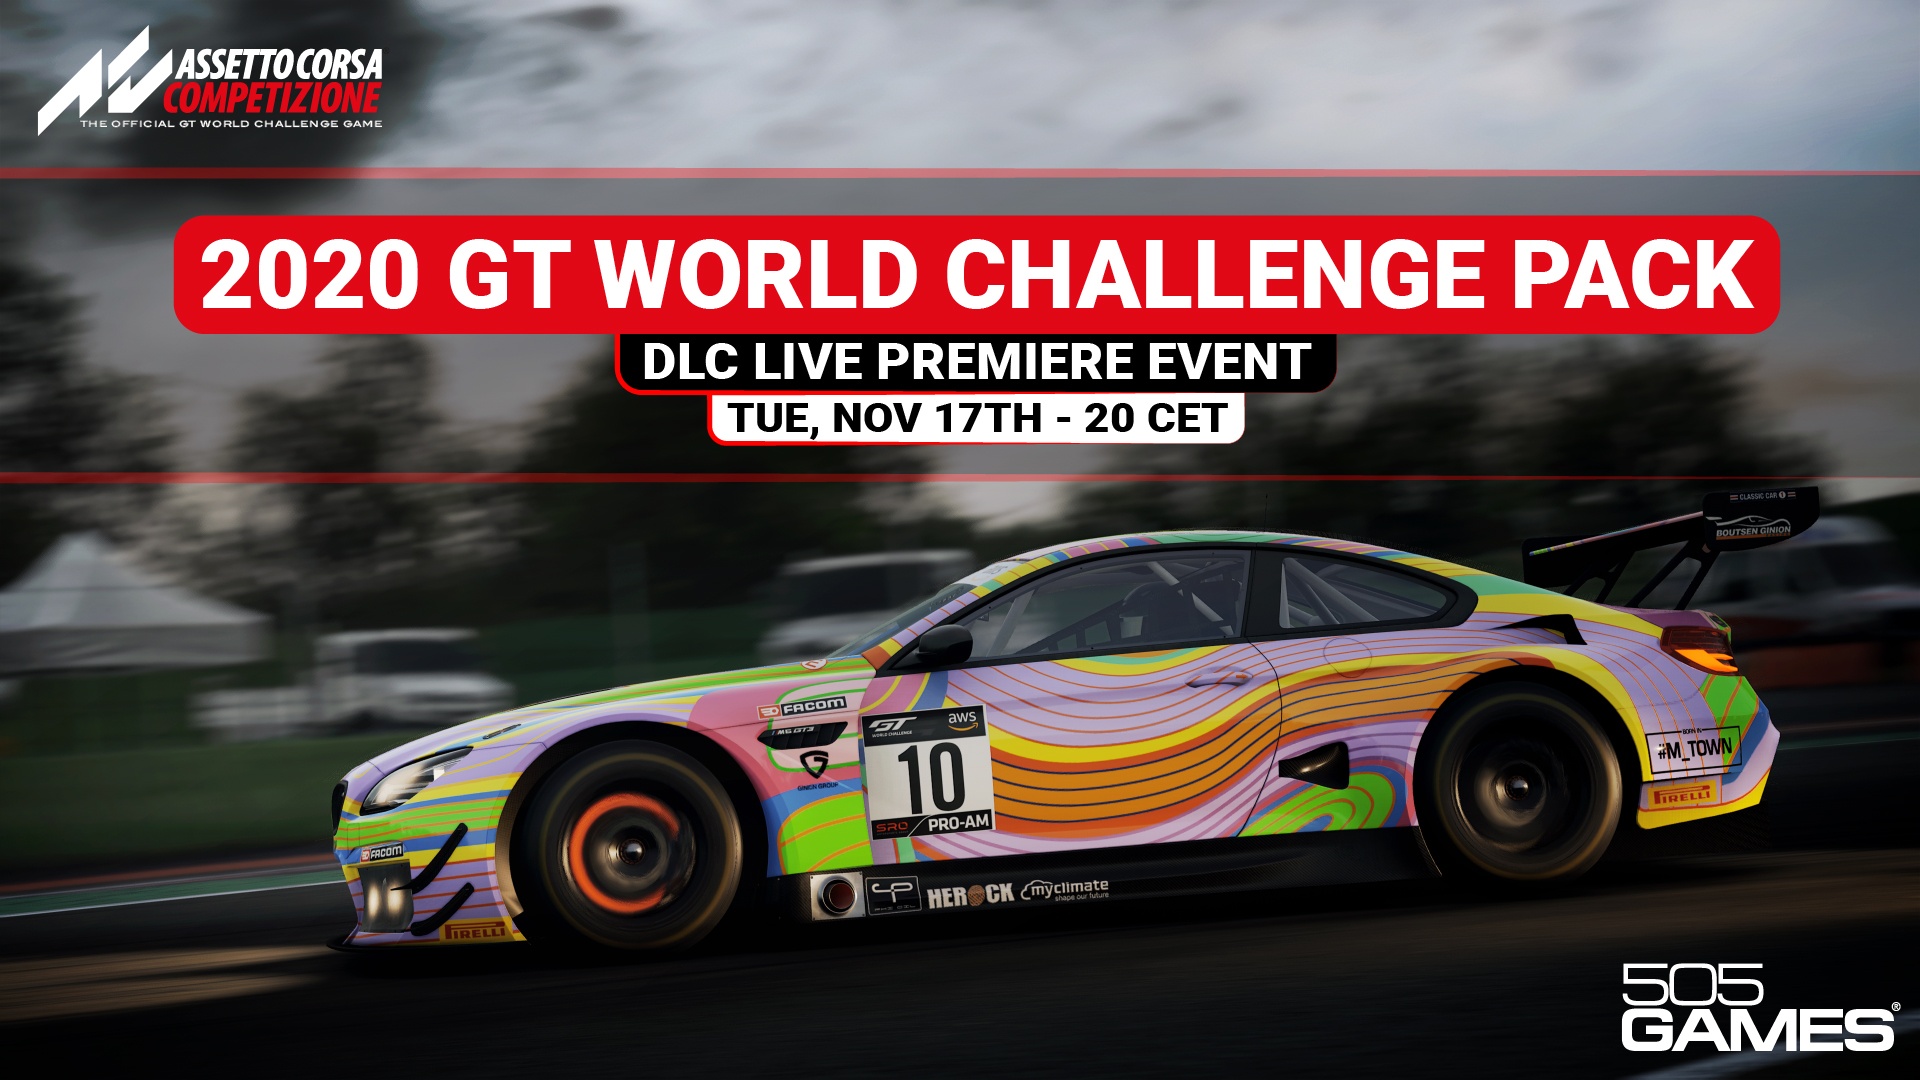 Assetto Corsa Competizione on console gets GT World Challenge DLC